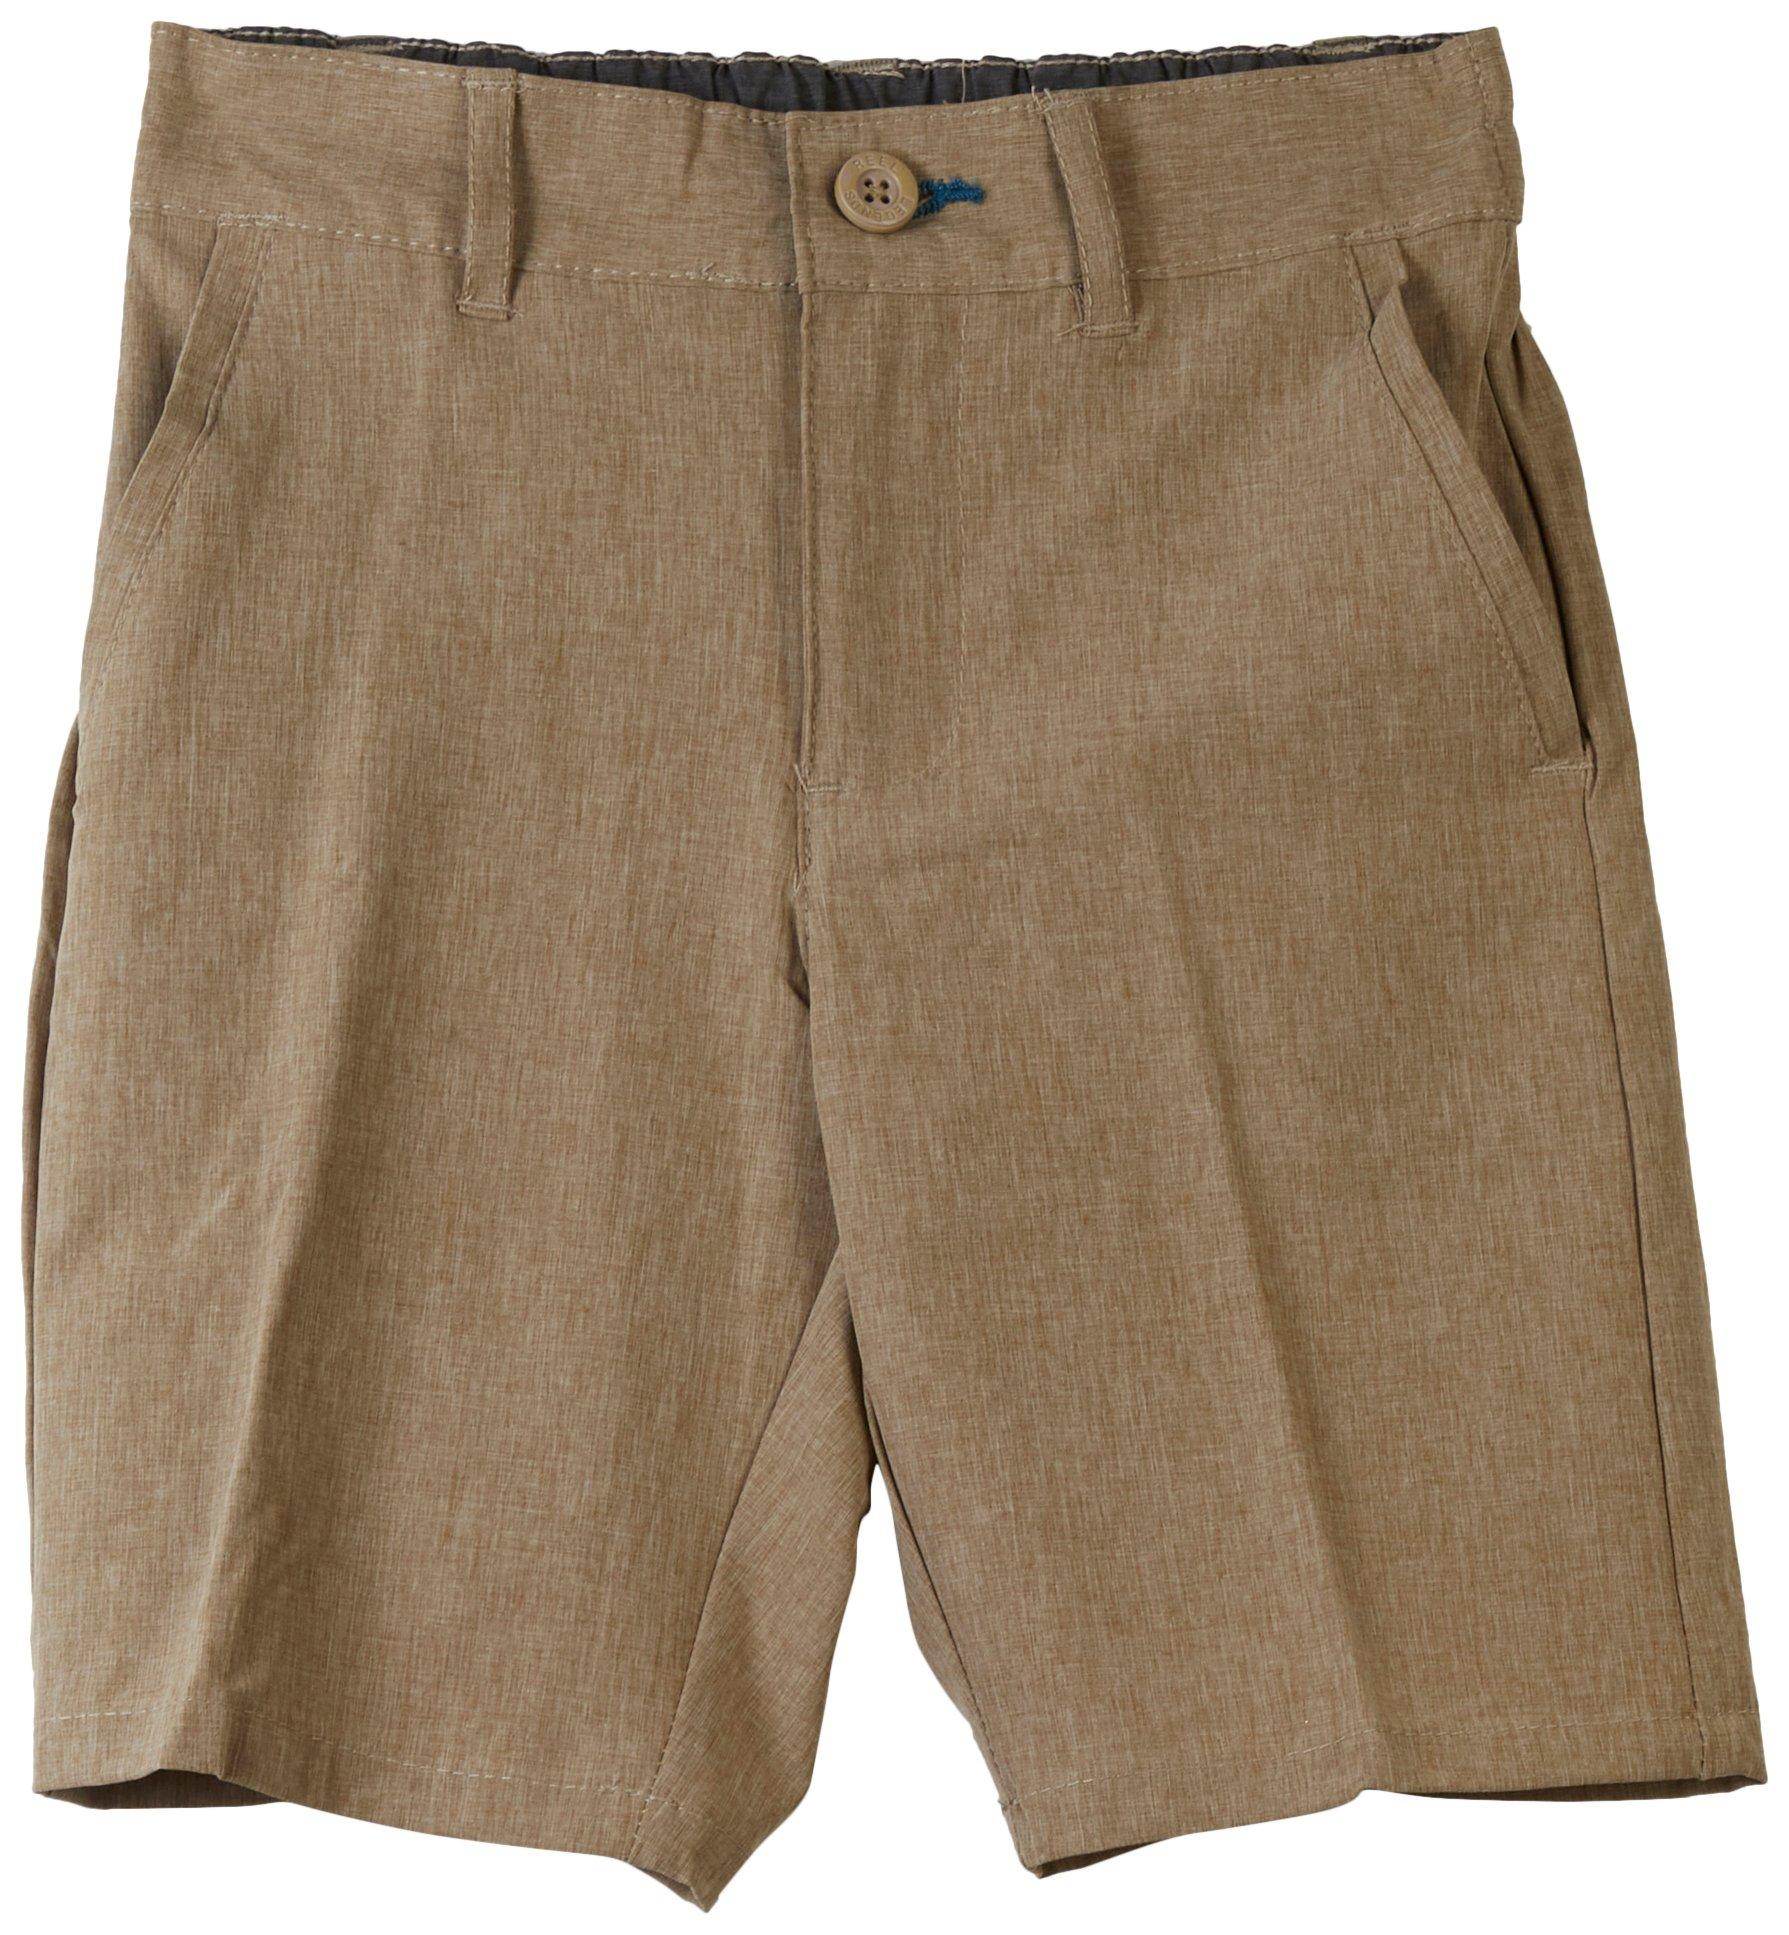 Reel Legends Little Boys 7 in. Solid Hybrid Shorts